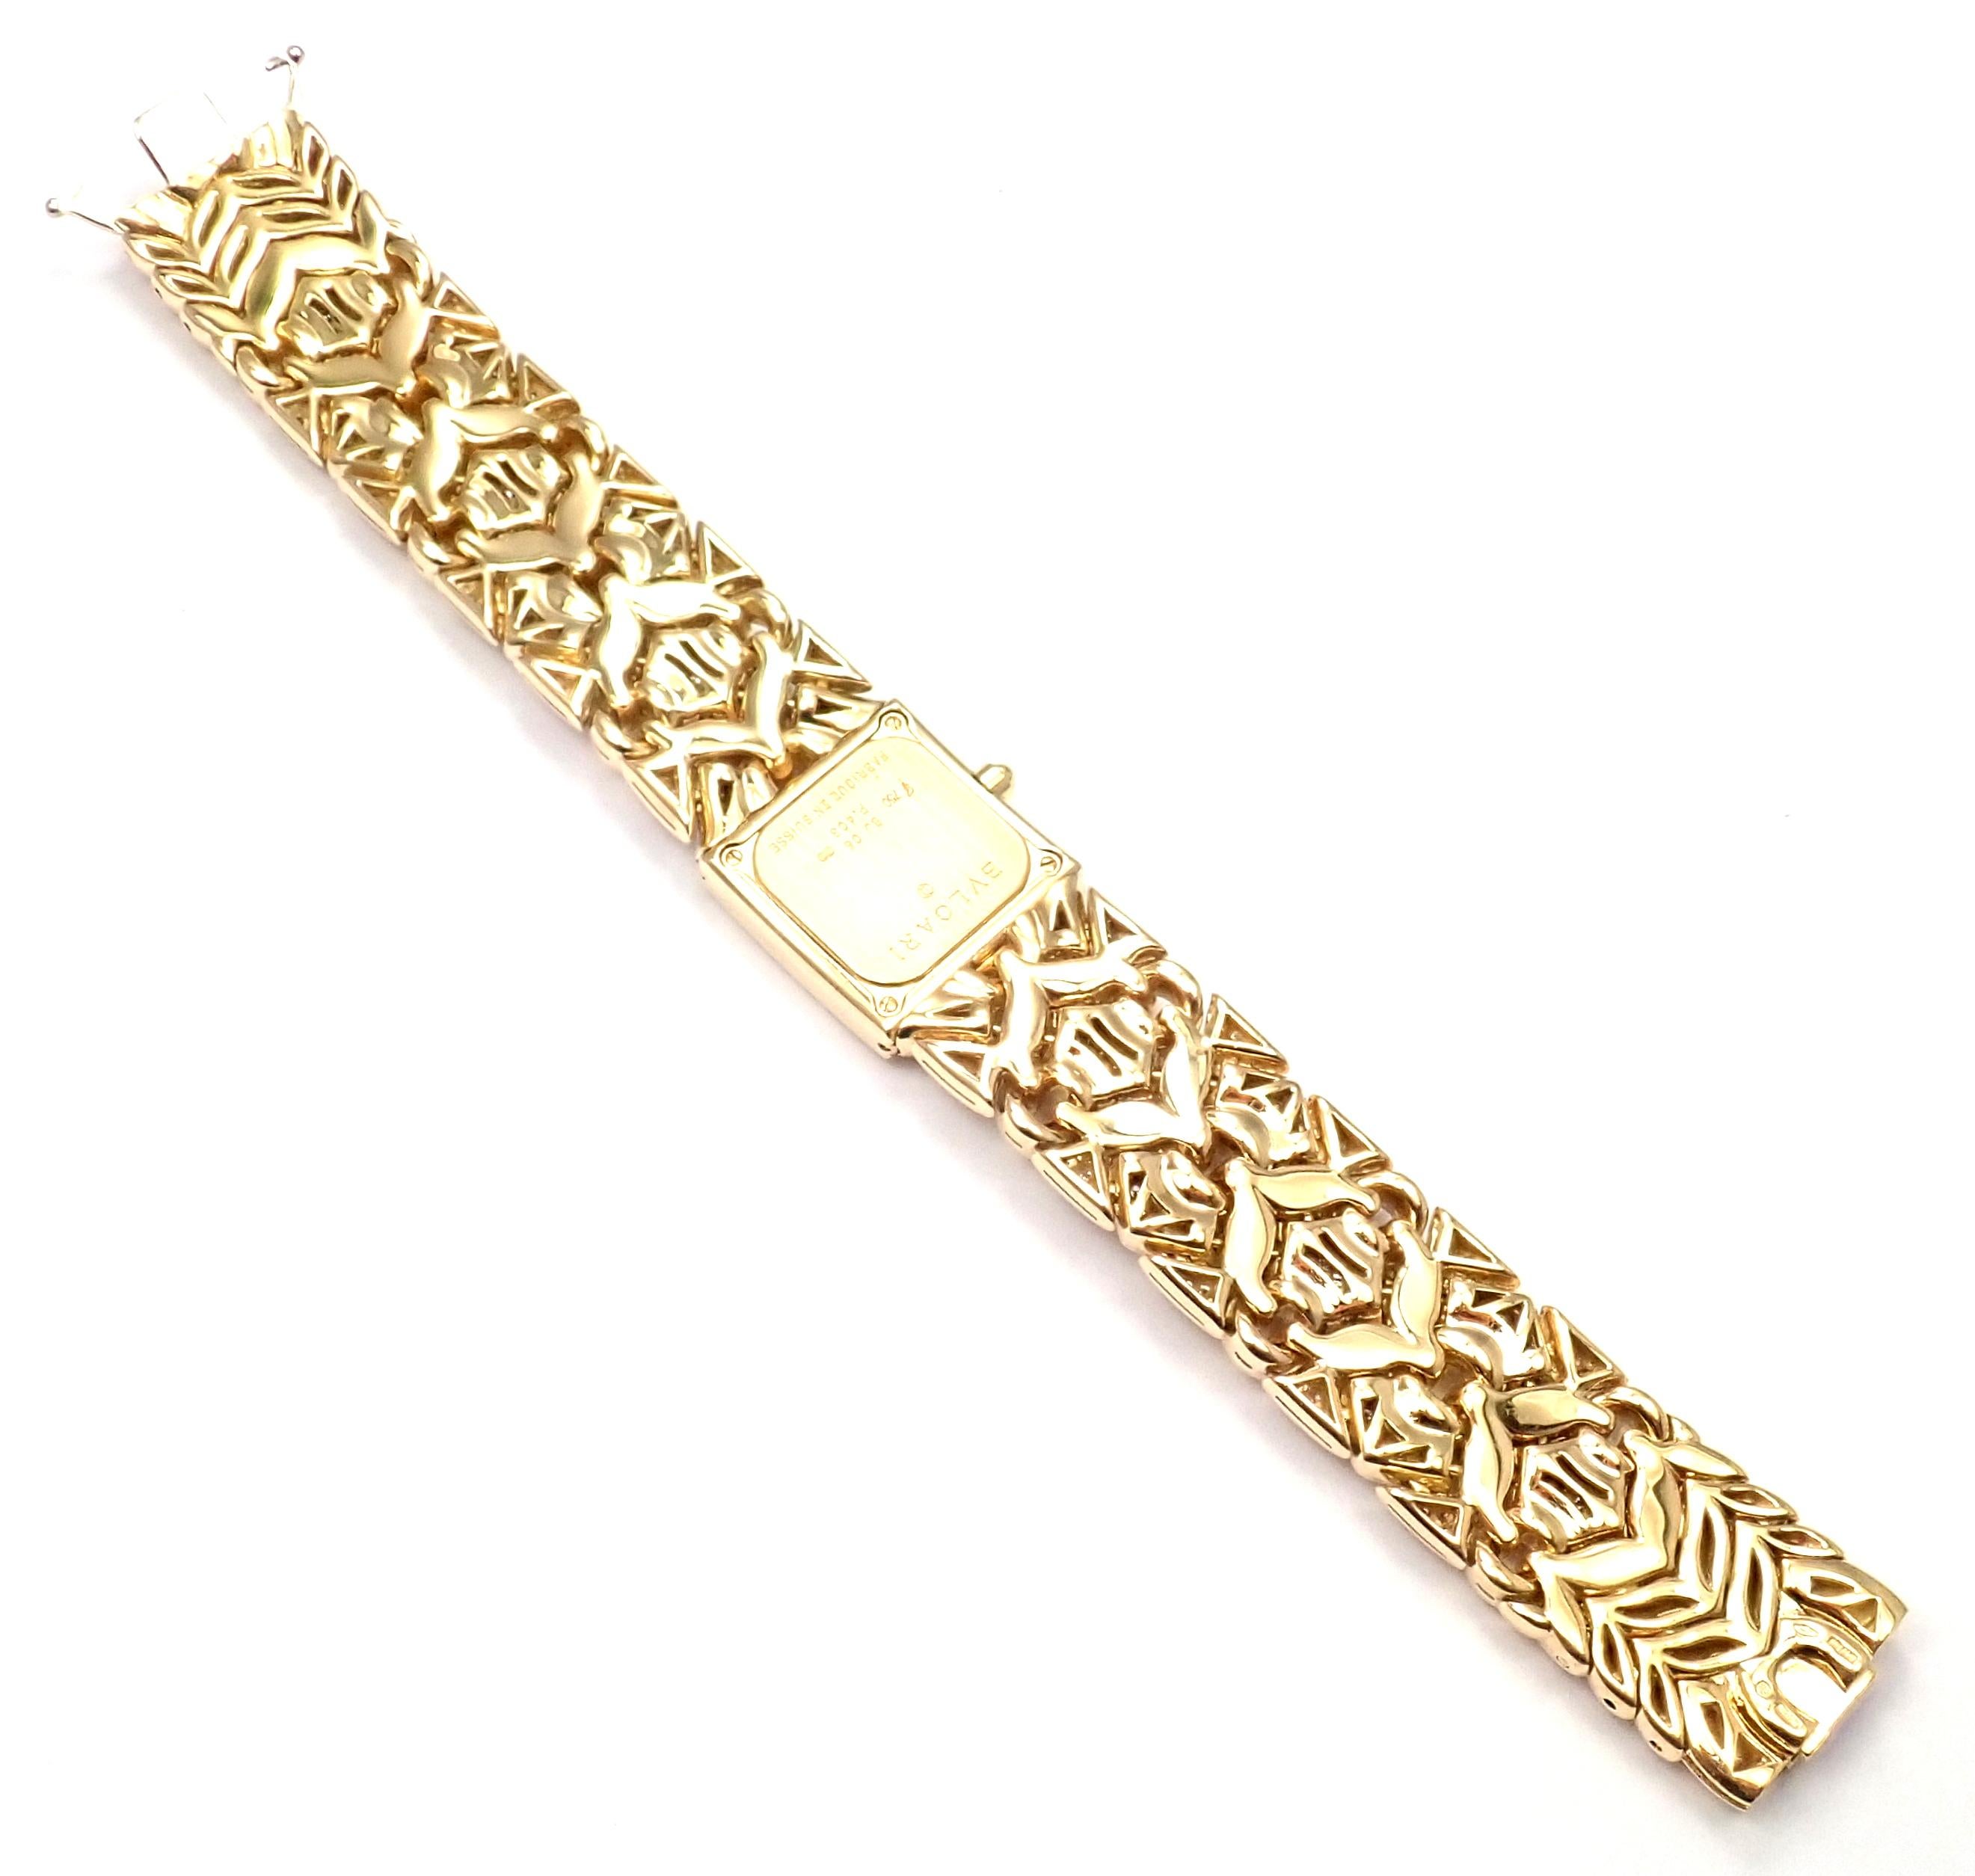 Brilliant Cut Bulgari Bvlgari Trika Diamond Yellow Gold Watch